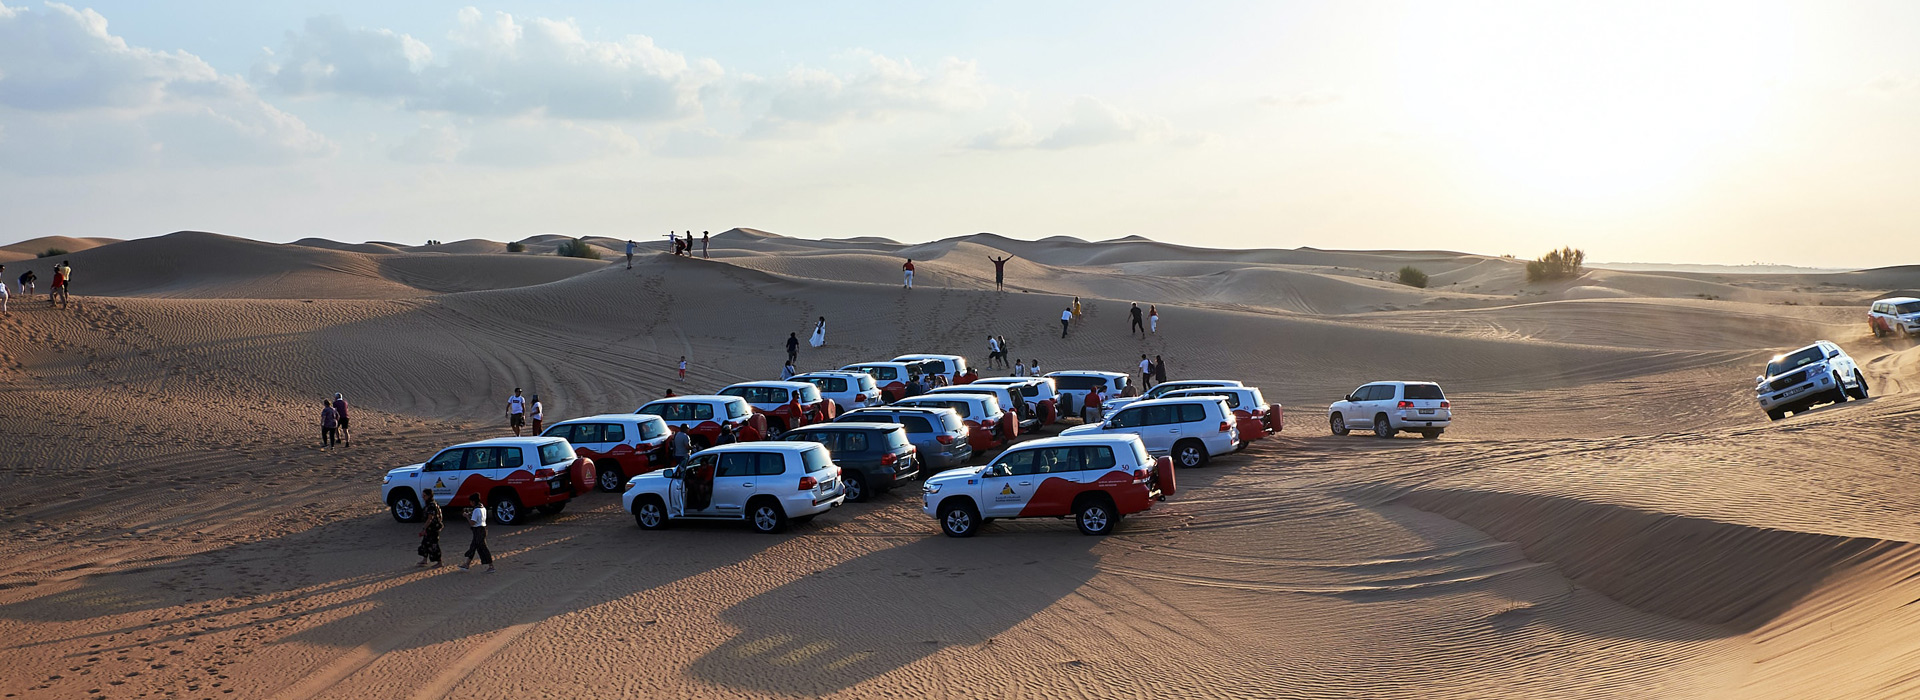 Desert safari in Ras Al Khaimah | Desert safari in Dubai